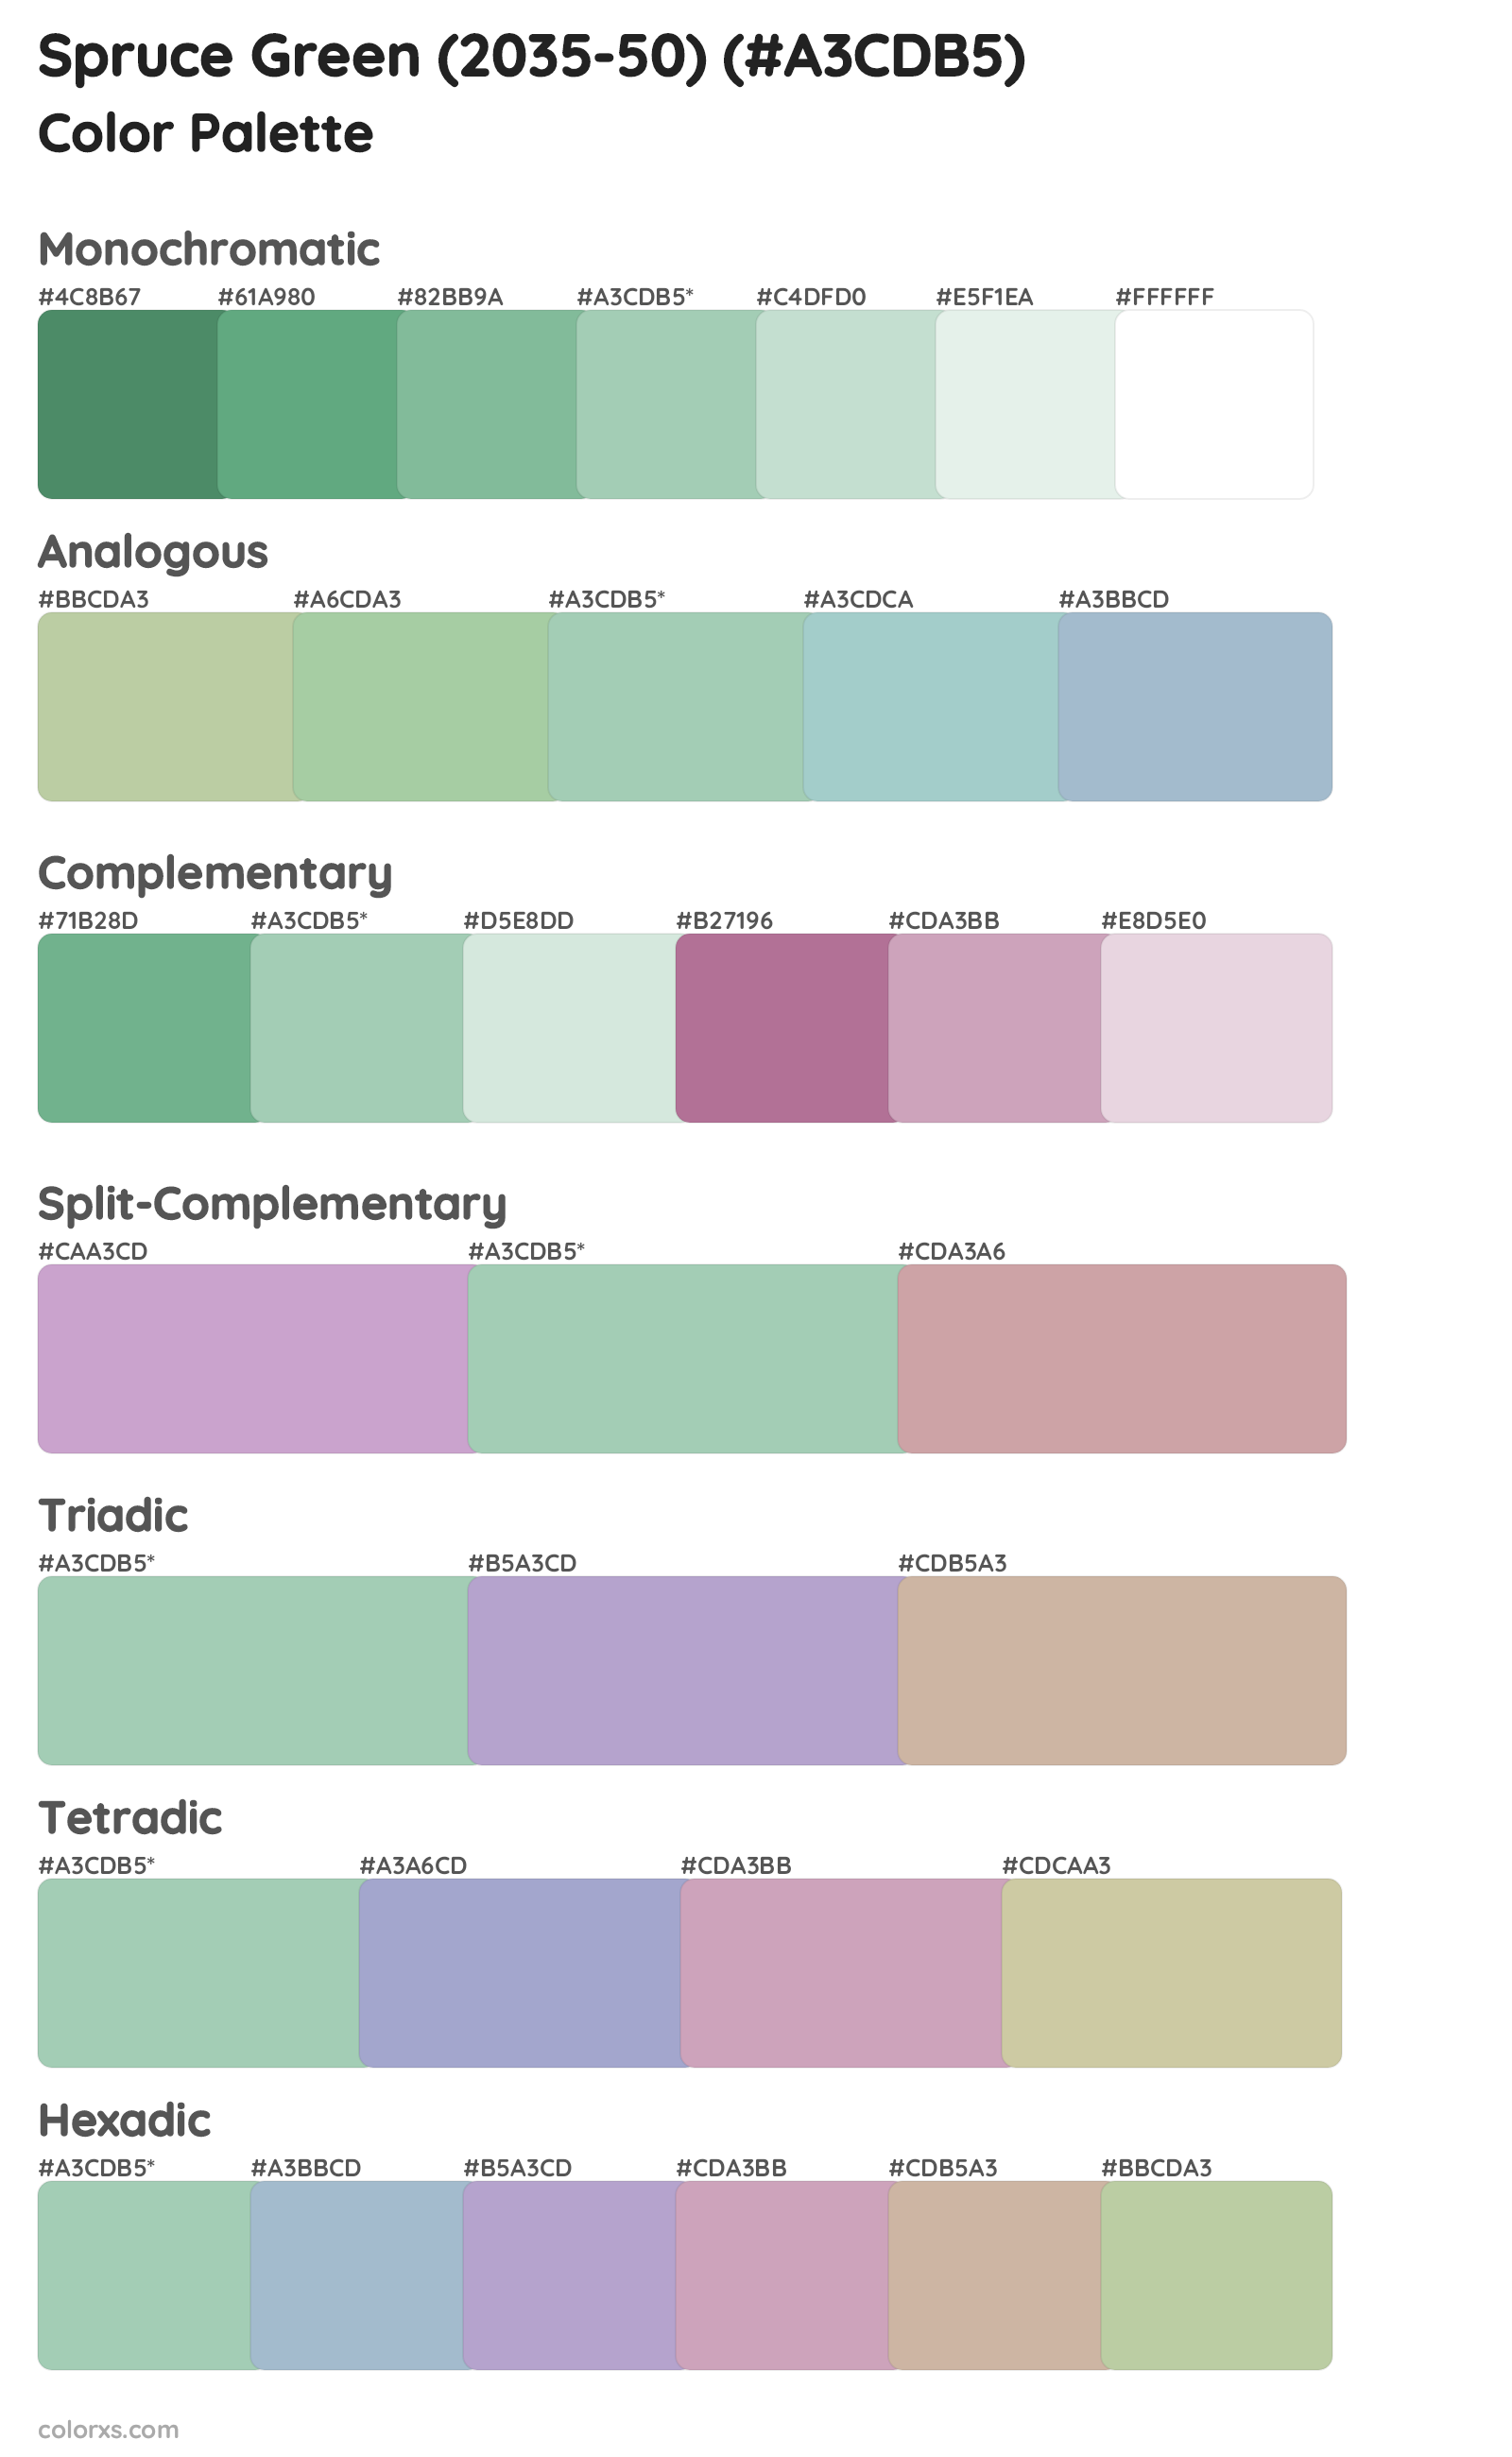 Spruce Green (2035-50) Color Scheme Palettes